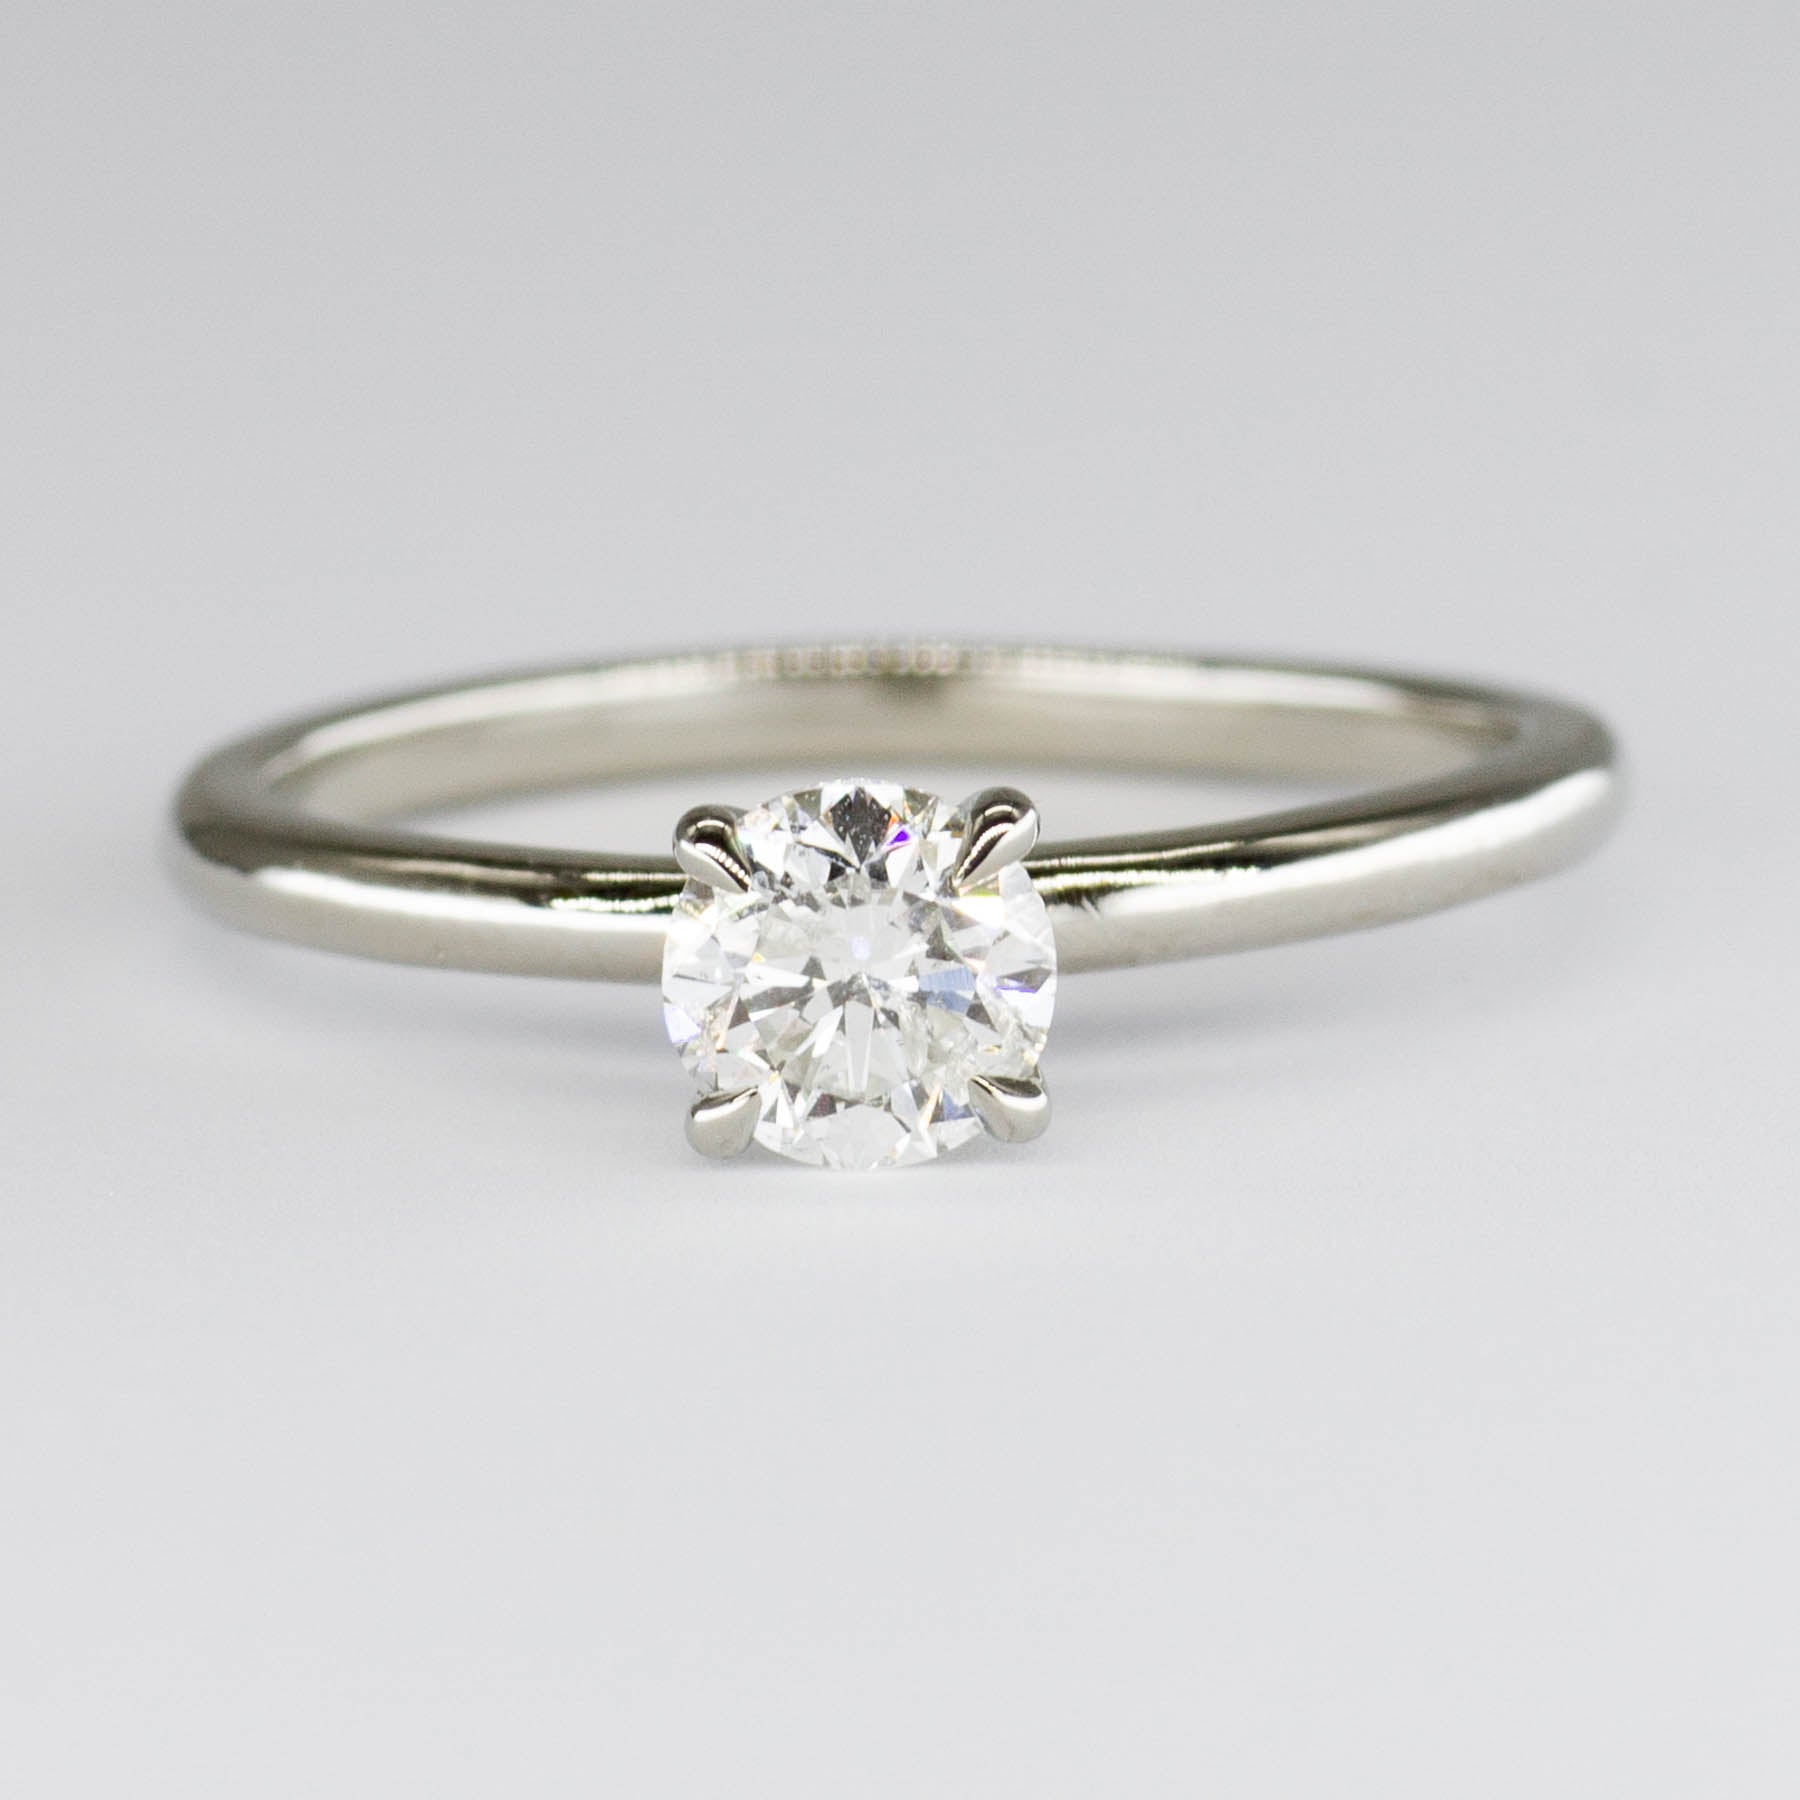 '100 Ways' 14k White Gold Diamond Solitaire Ring | 0.60ct | SZ 7 - 100 Ways